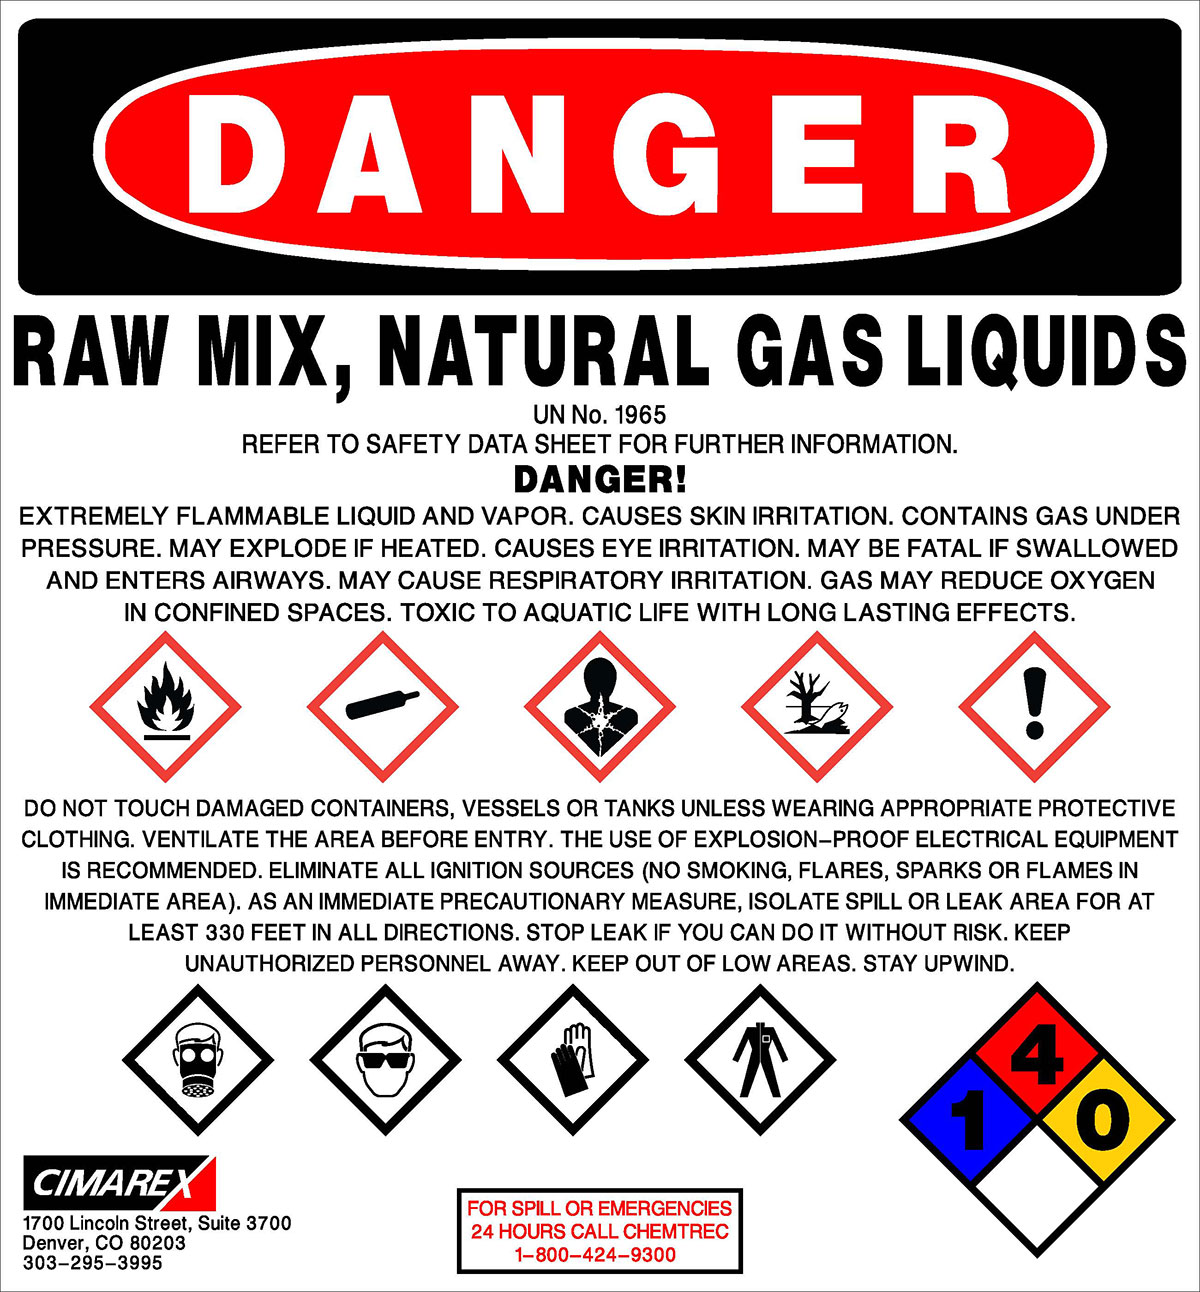 Raw Mix Natural Gas